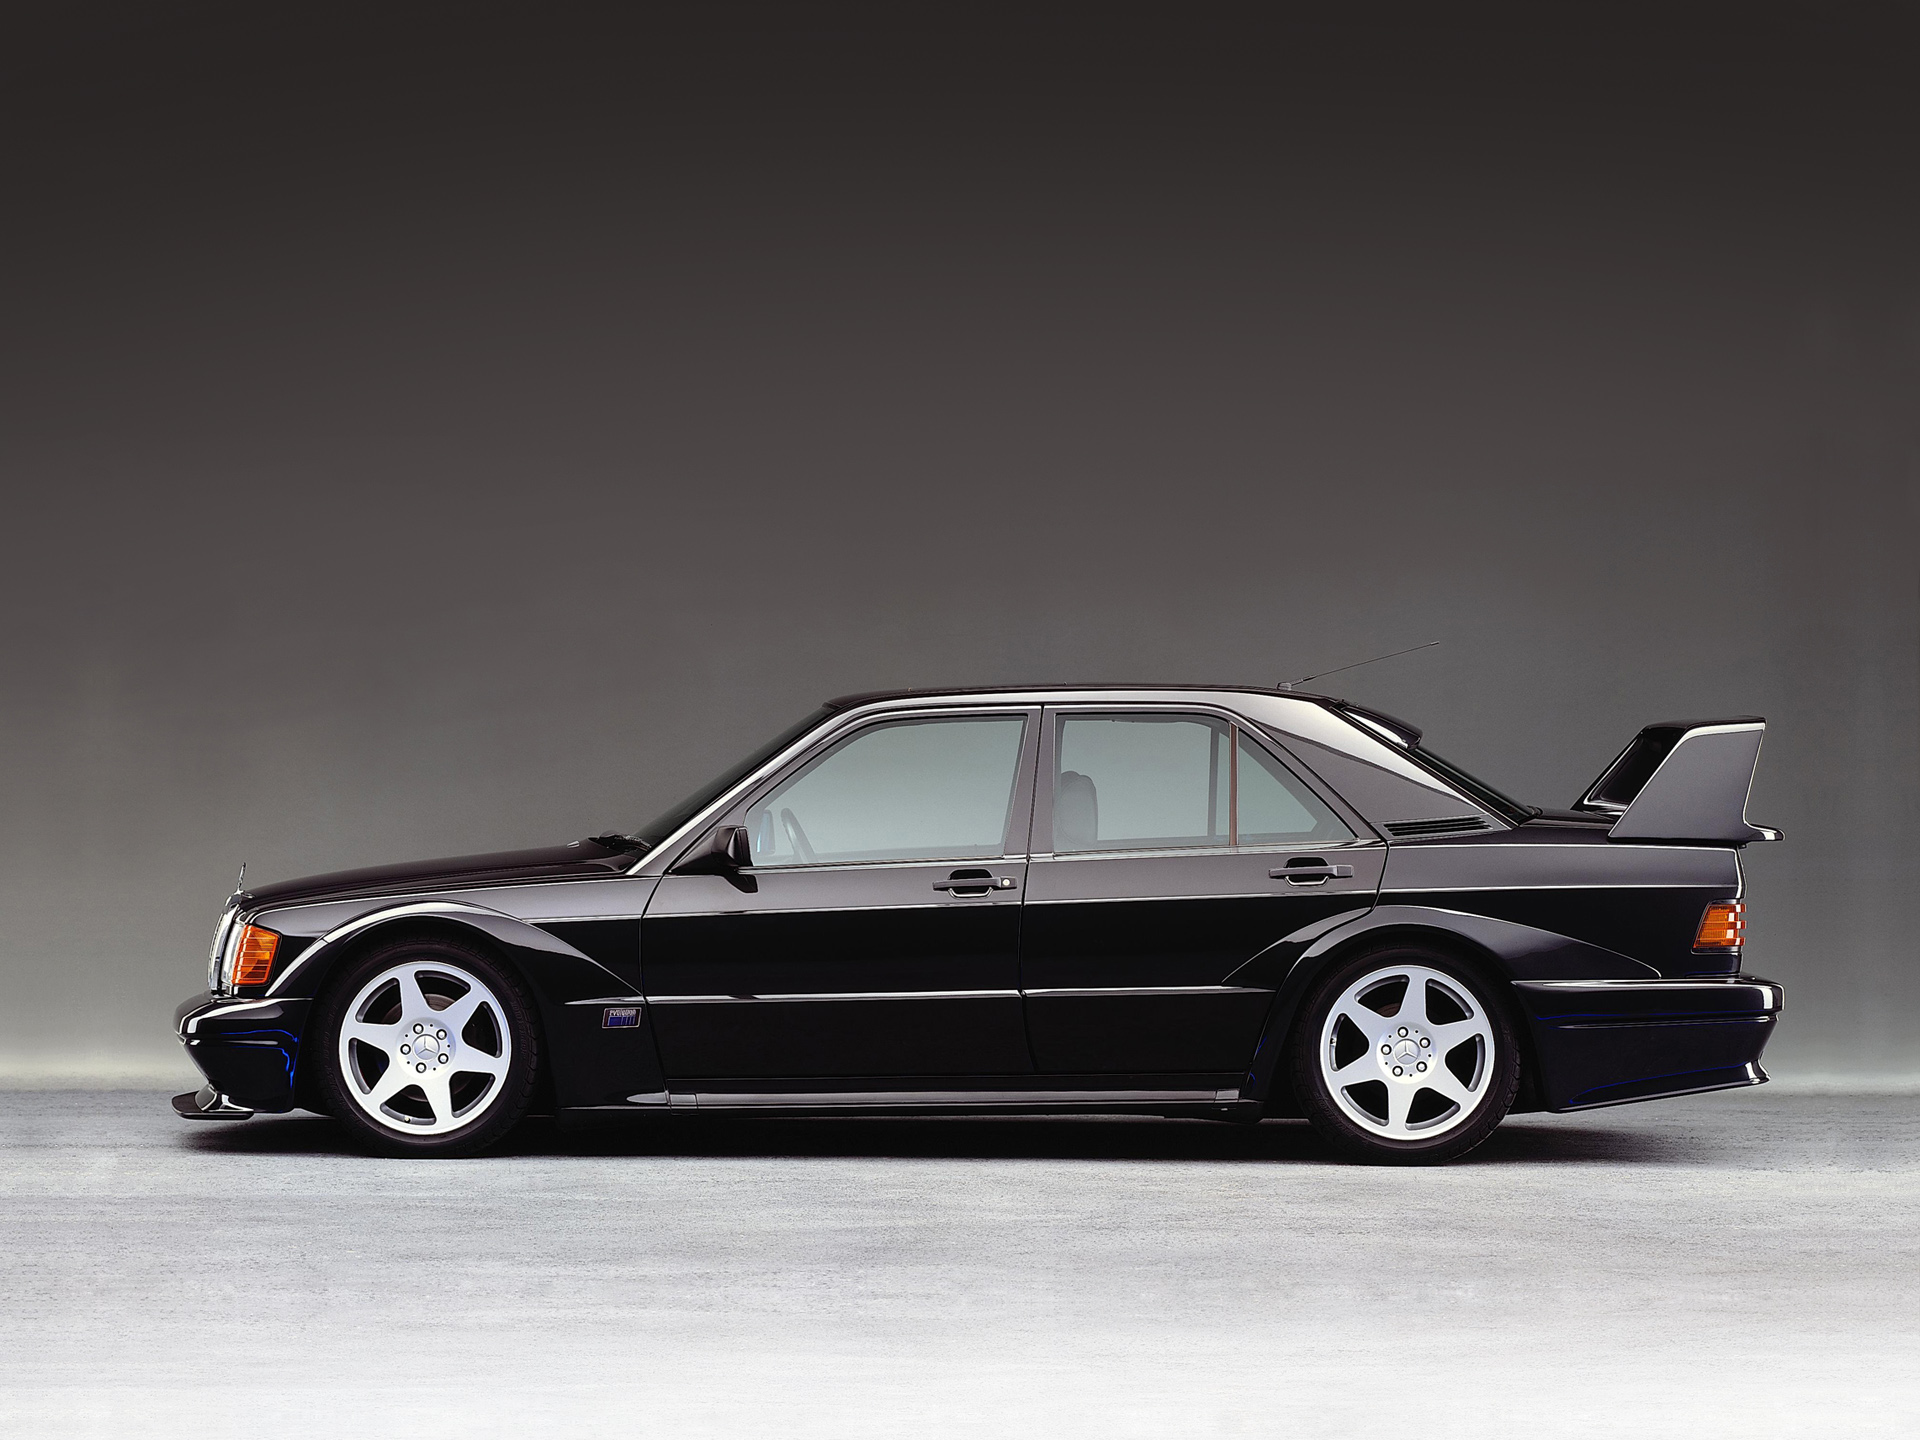  1990 Mercedes-Benz 190E Evolution II Wallpaper.